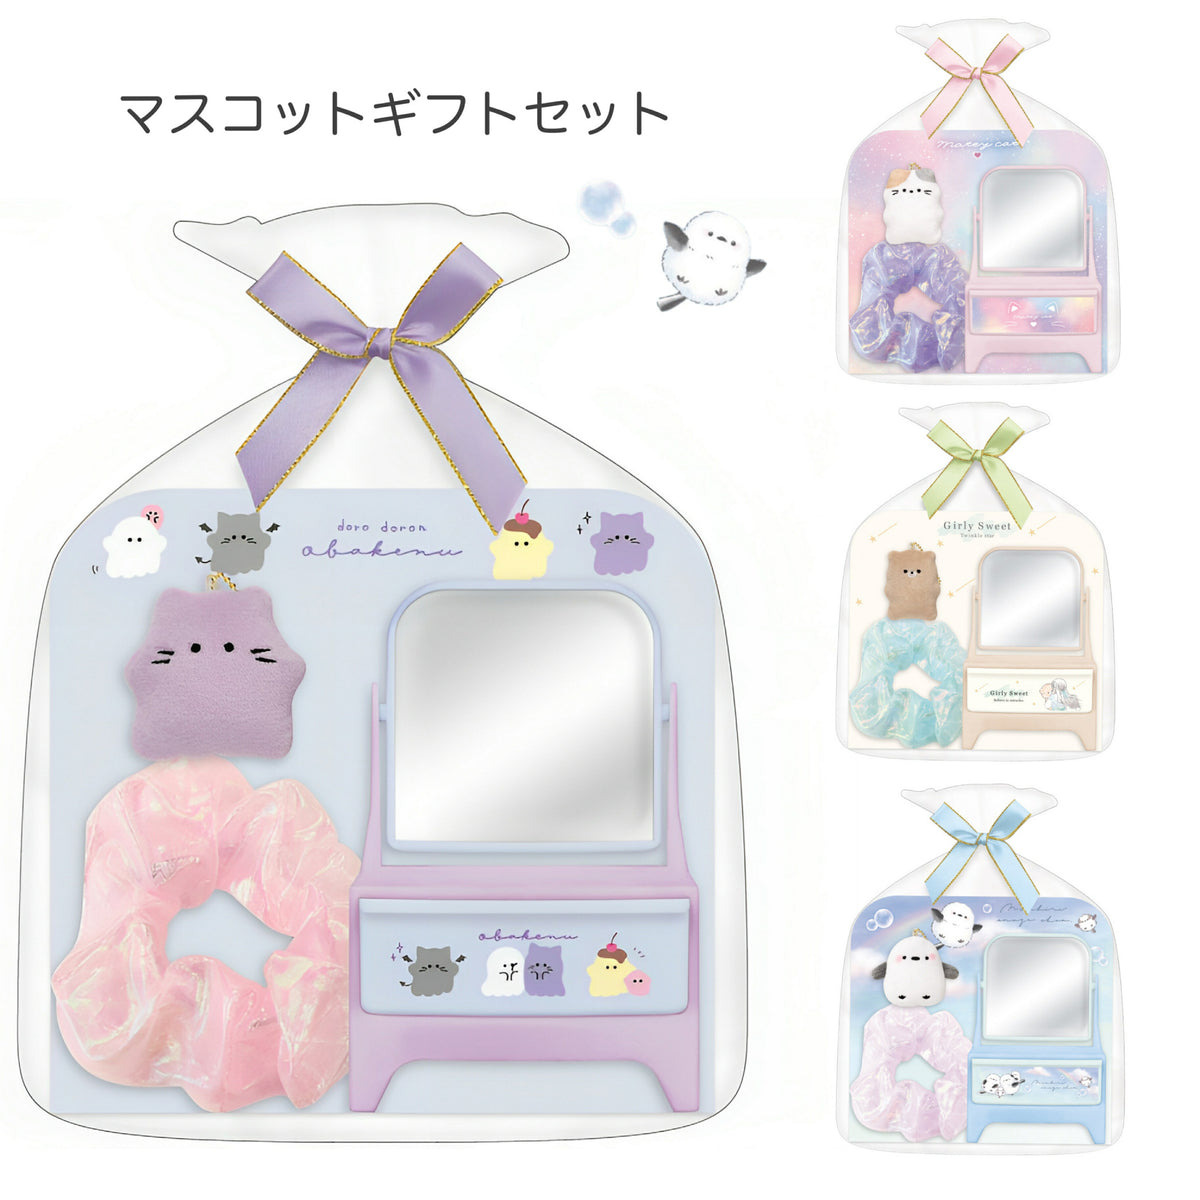 Stationery Gift Set - CRUX (Japan Edition)